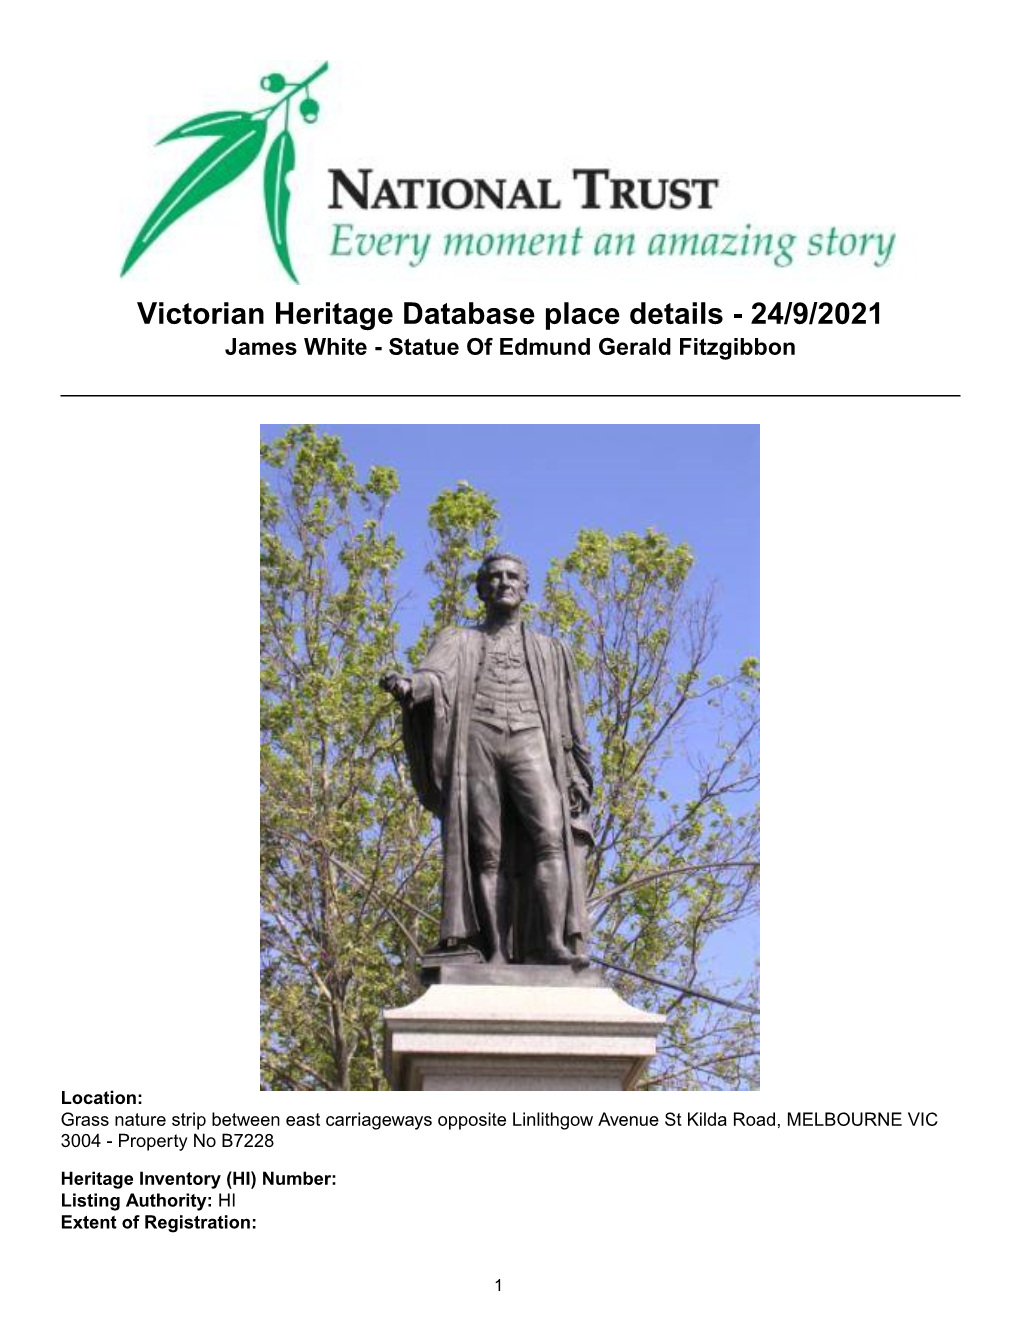 Victorian Heritage Database Place Details - 24/9/2021 James White - Statue of Edmund Gerald Fitzgibbon